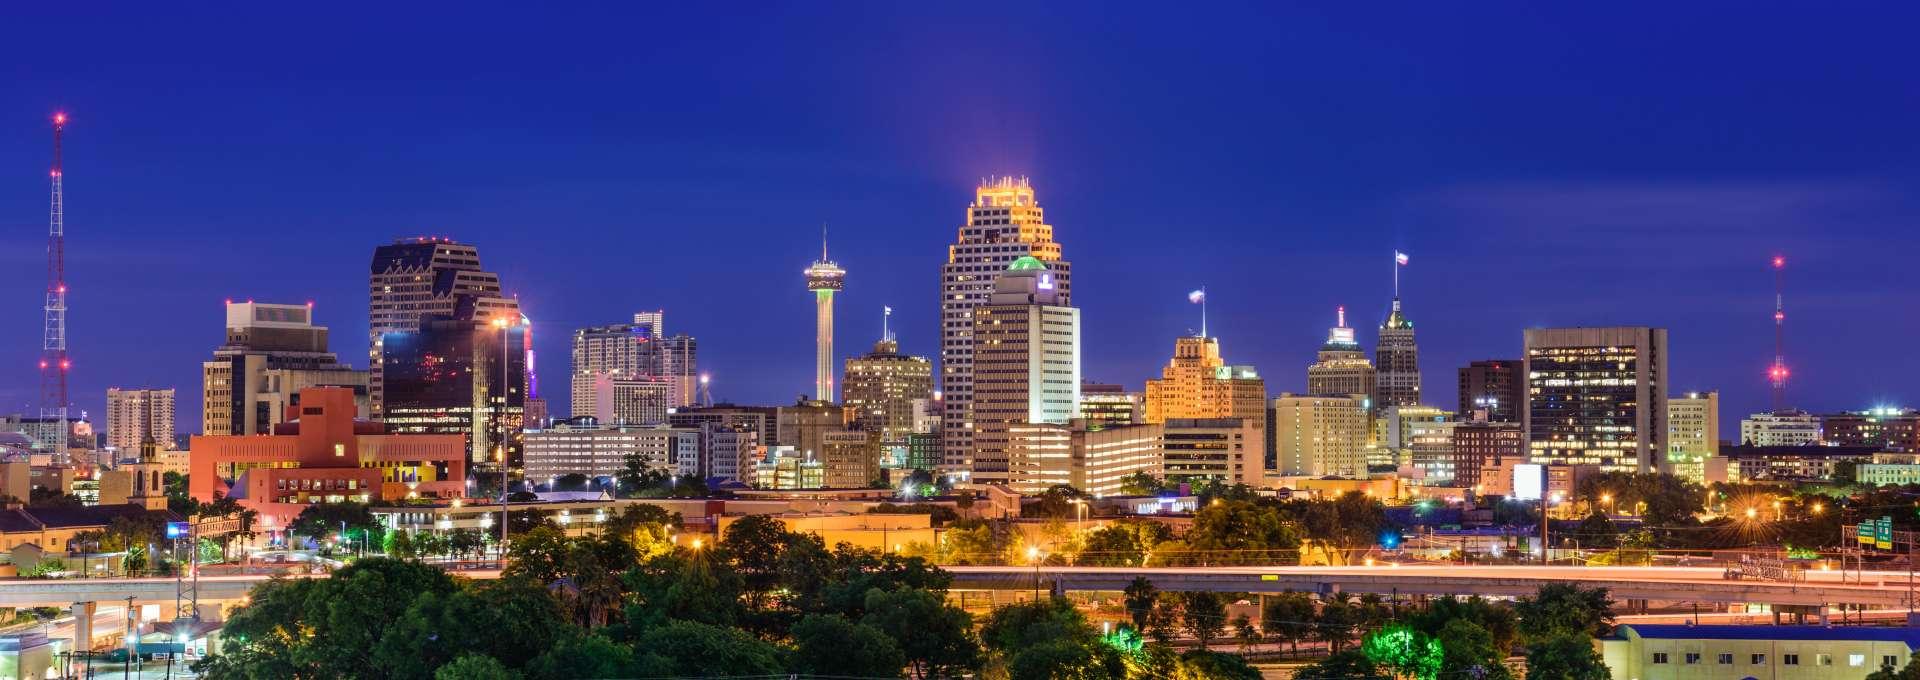 Skyline von San Antonio, Texas, USA.